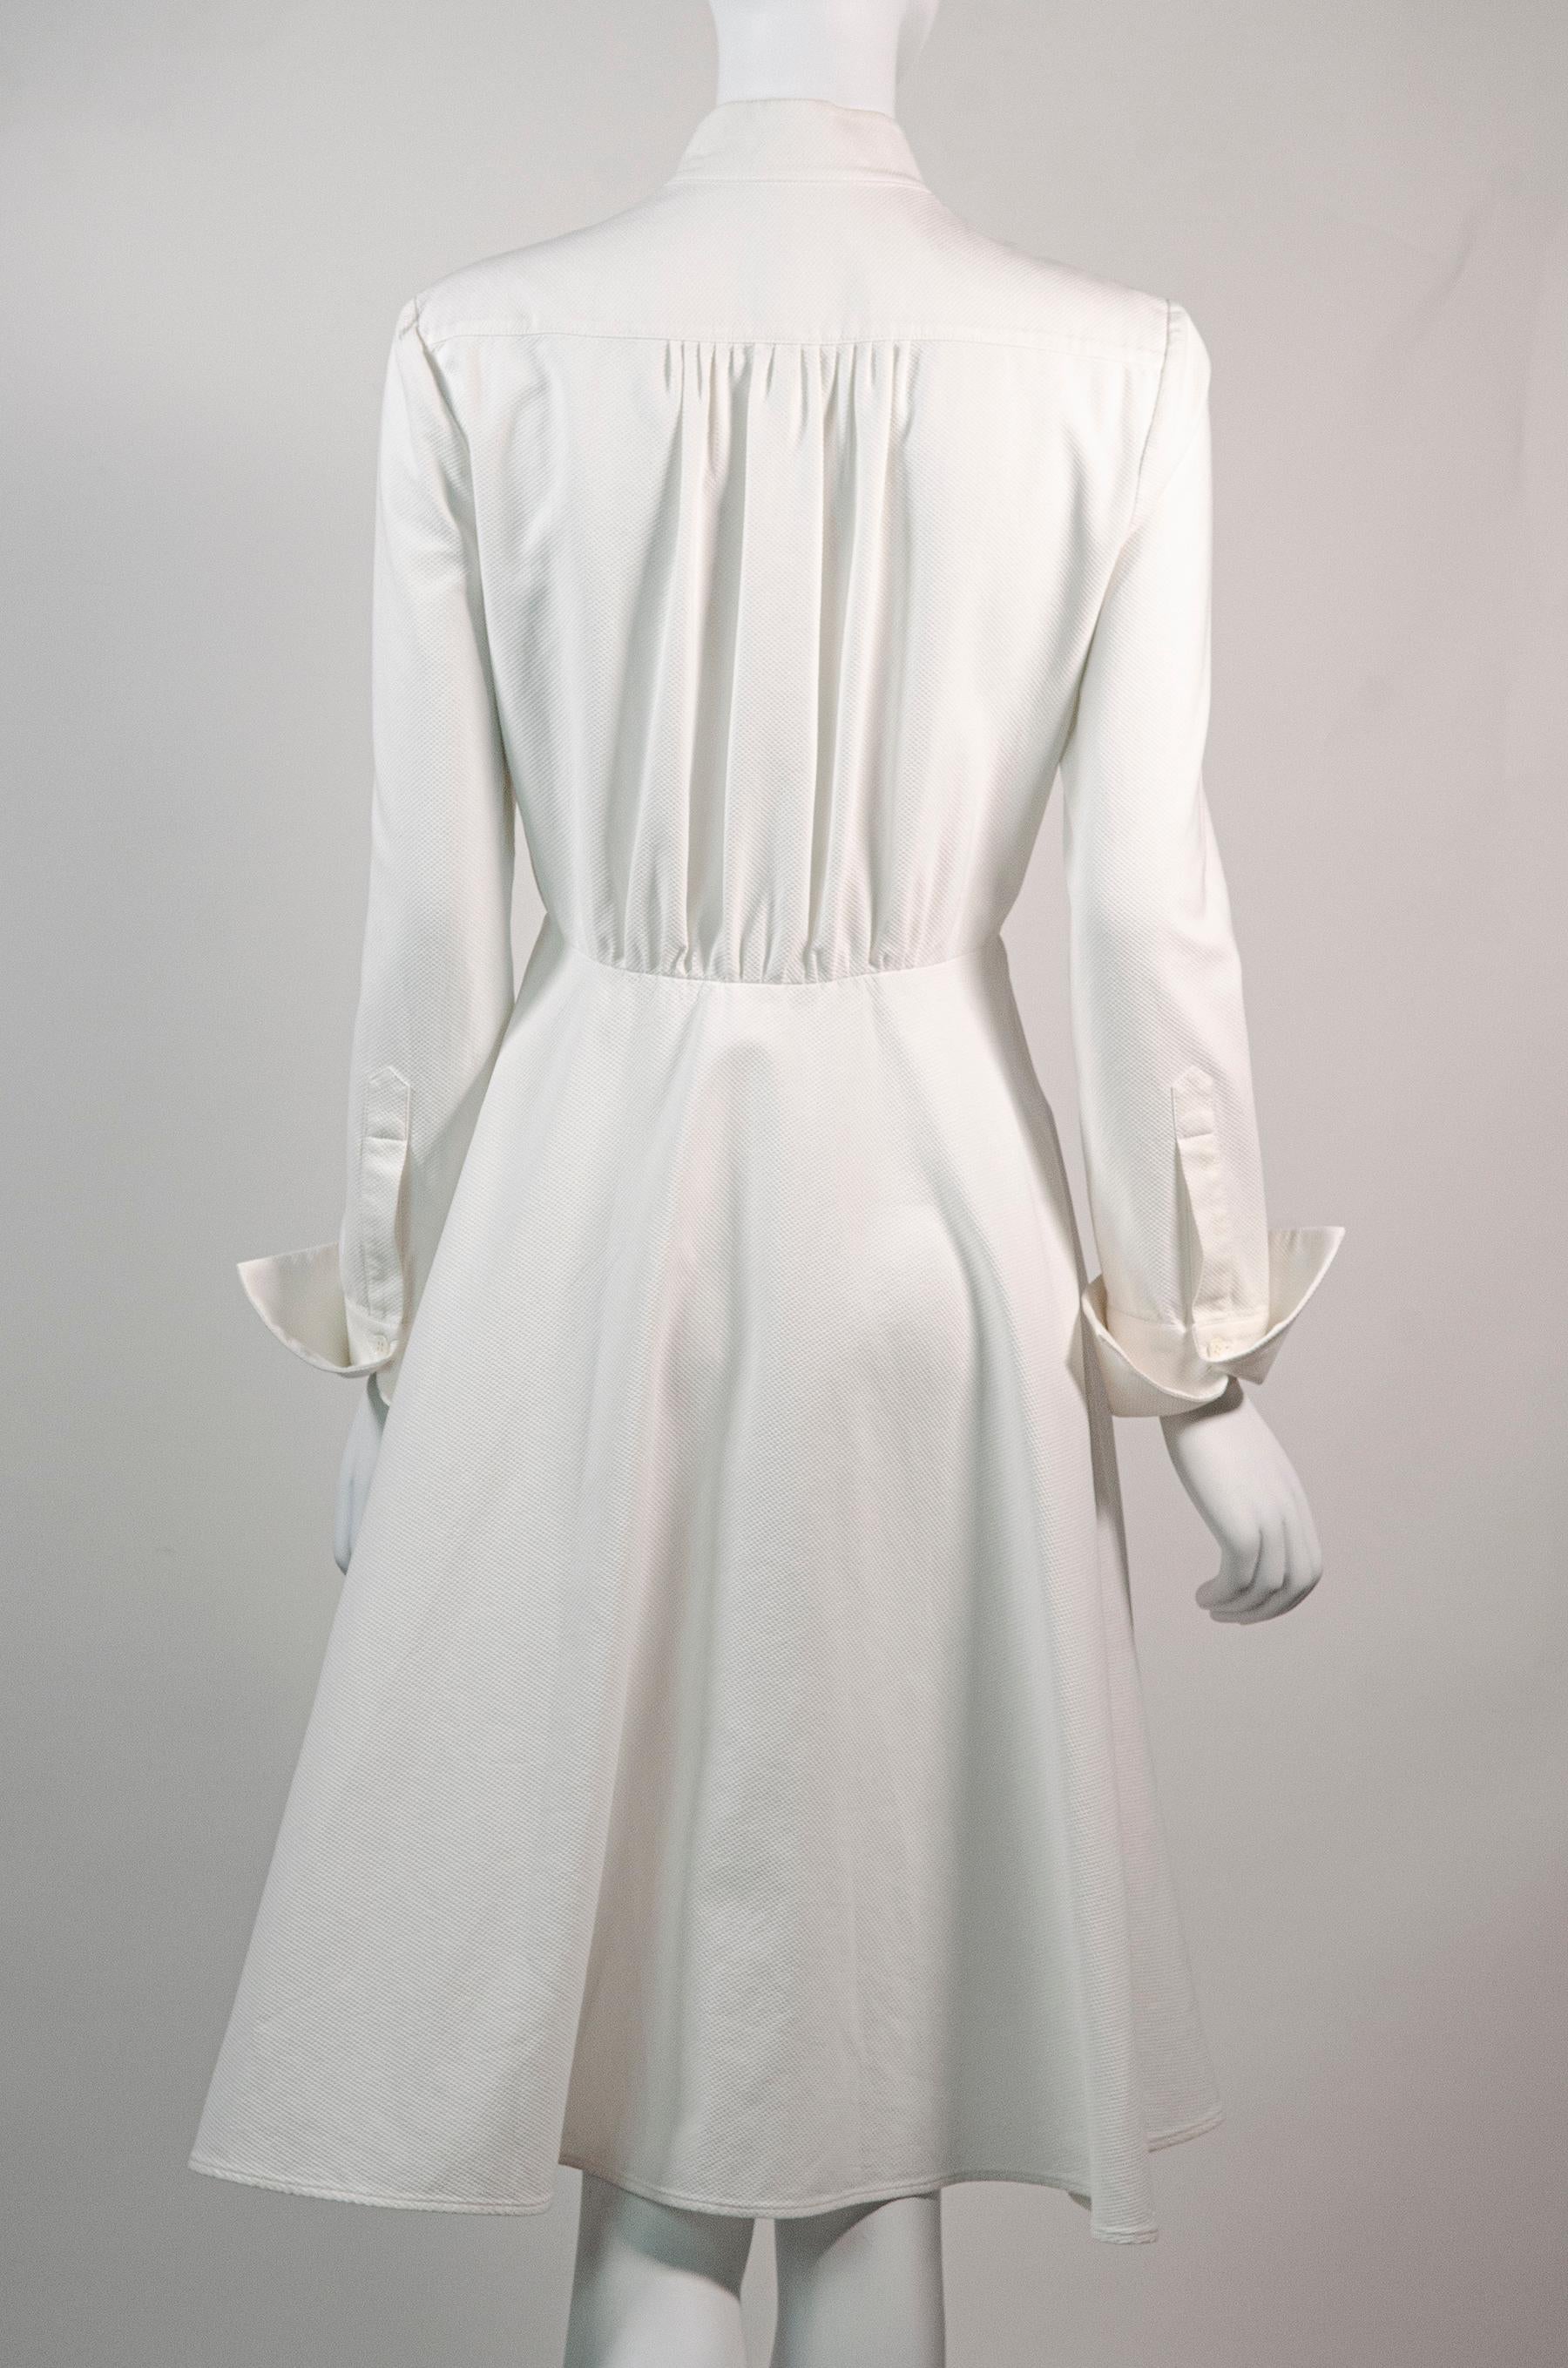 Gray ALEXANDER MCQUEEN Optical White Cotton Shirt Dress With Dramatic Feminine Skirt